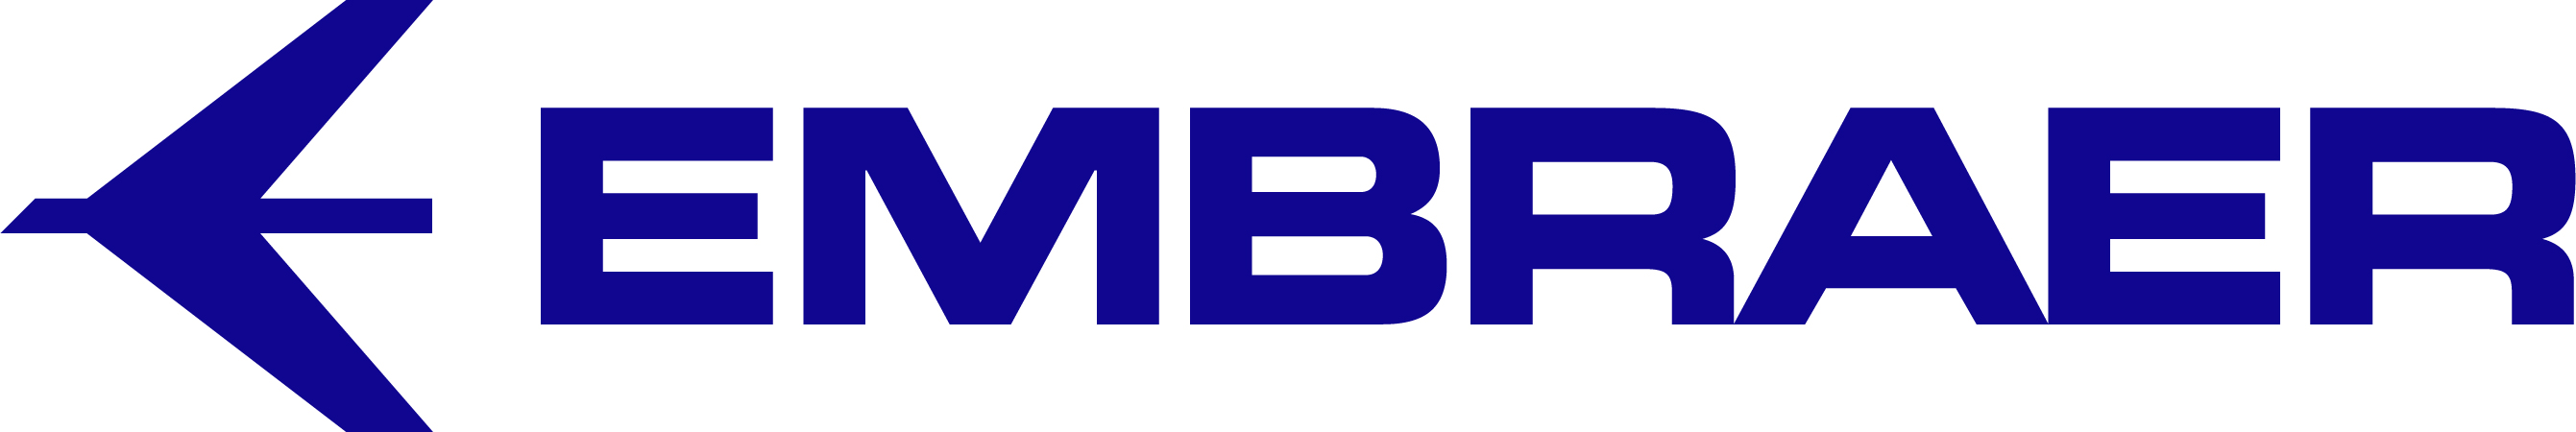 Embraer Services & Support logo